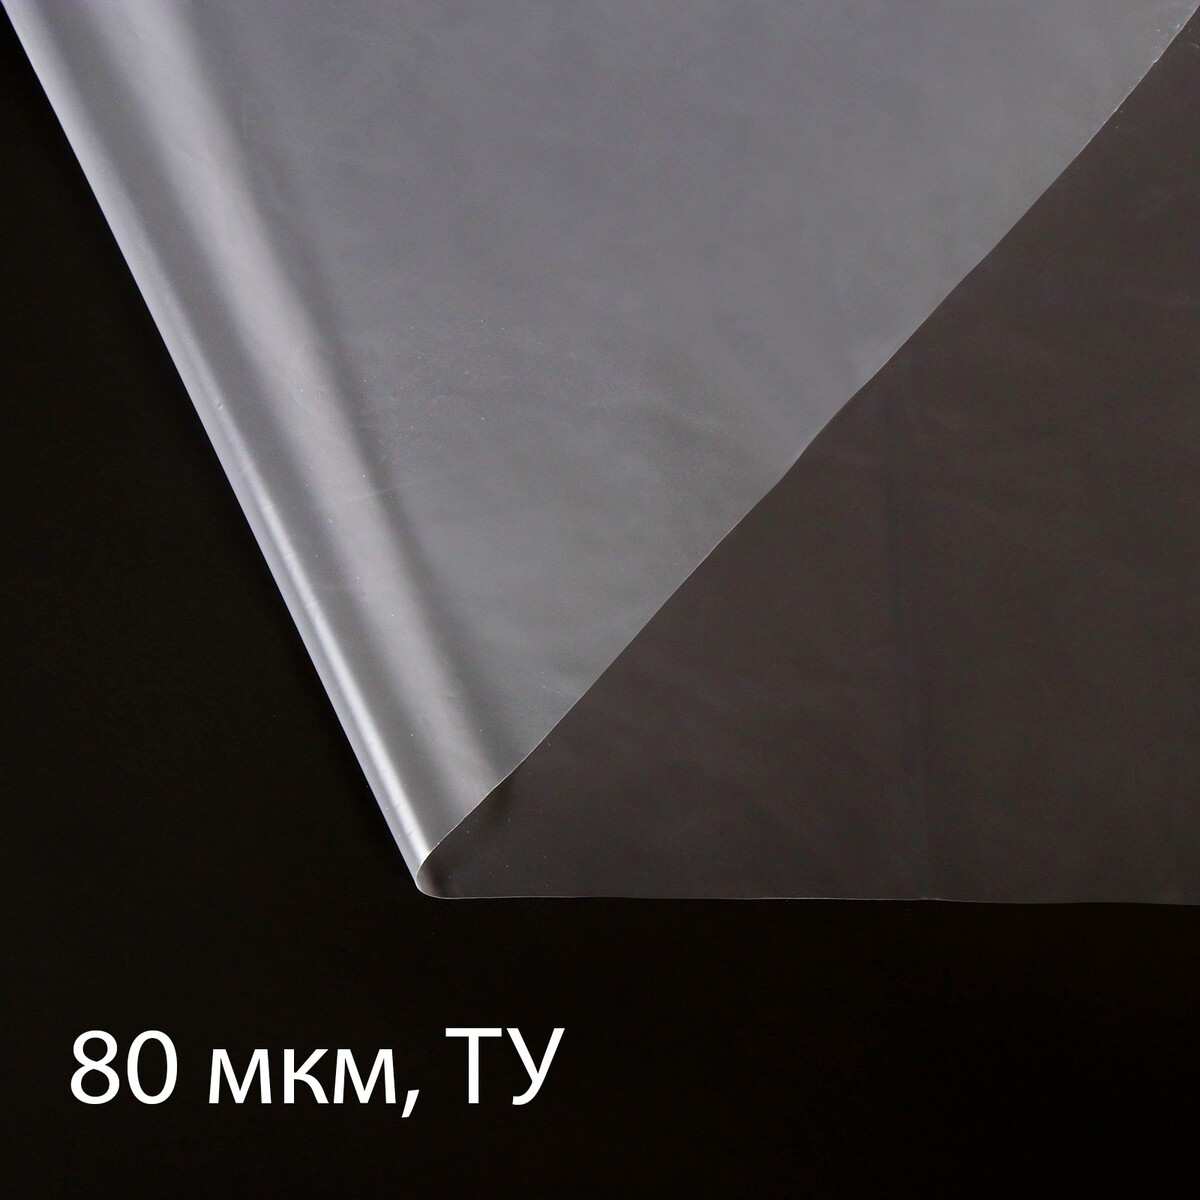 Пленка полиэтиленовая 80 мкм, прозрачная, длина 5 м, ширина 3 м, рукав (1.5 × 2 м), эконом 50% пленка полиэтиленовая толщина 200 мкм прозрачная 5 × 3 м рукав 1 5 × 2 м эконом 50%